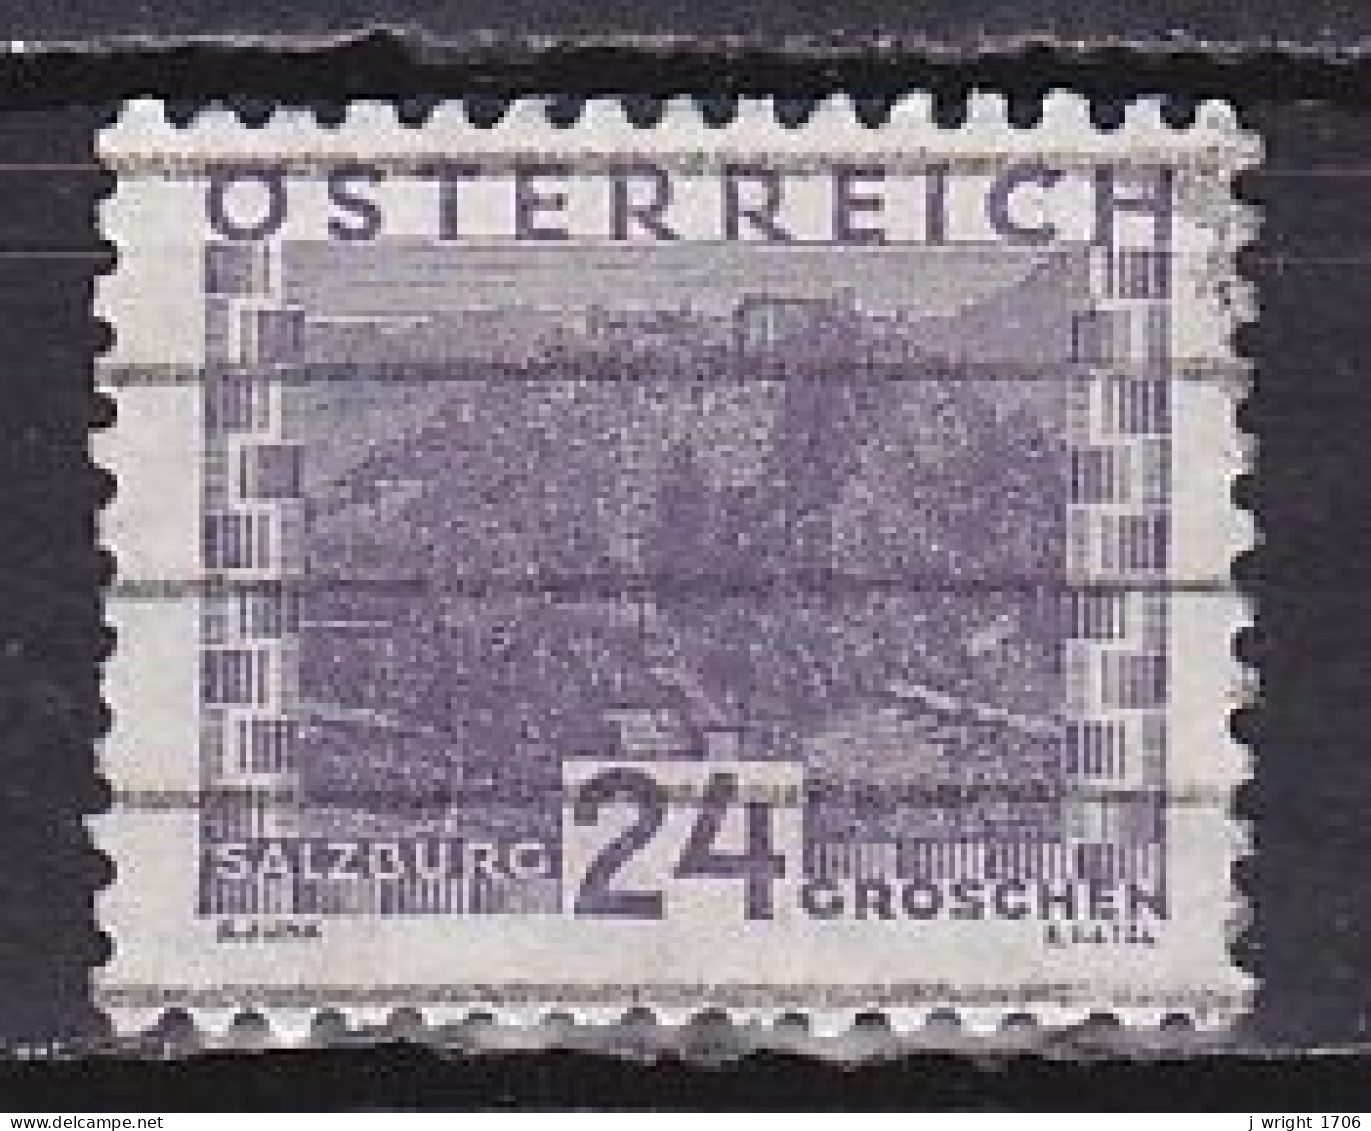 Austria, 1932, Landscapes Small Format/Salzburg, 24g, USED - Gebraucht